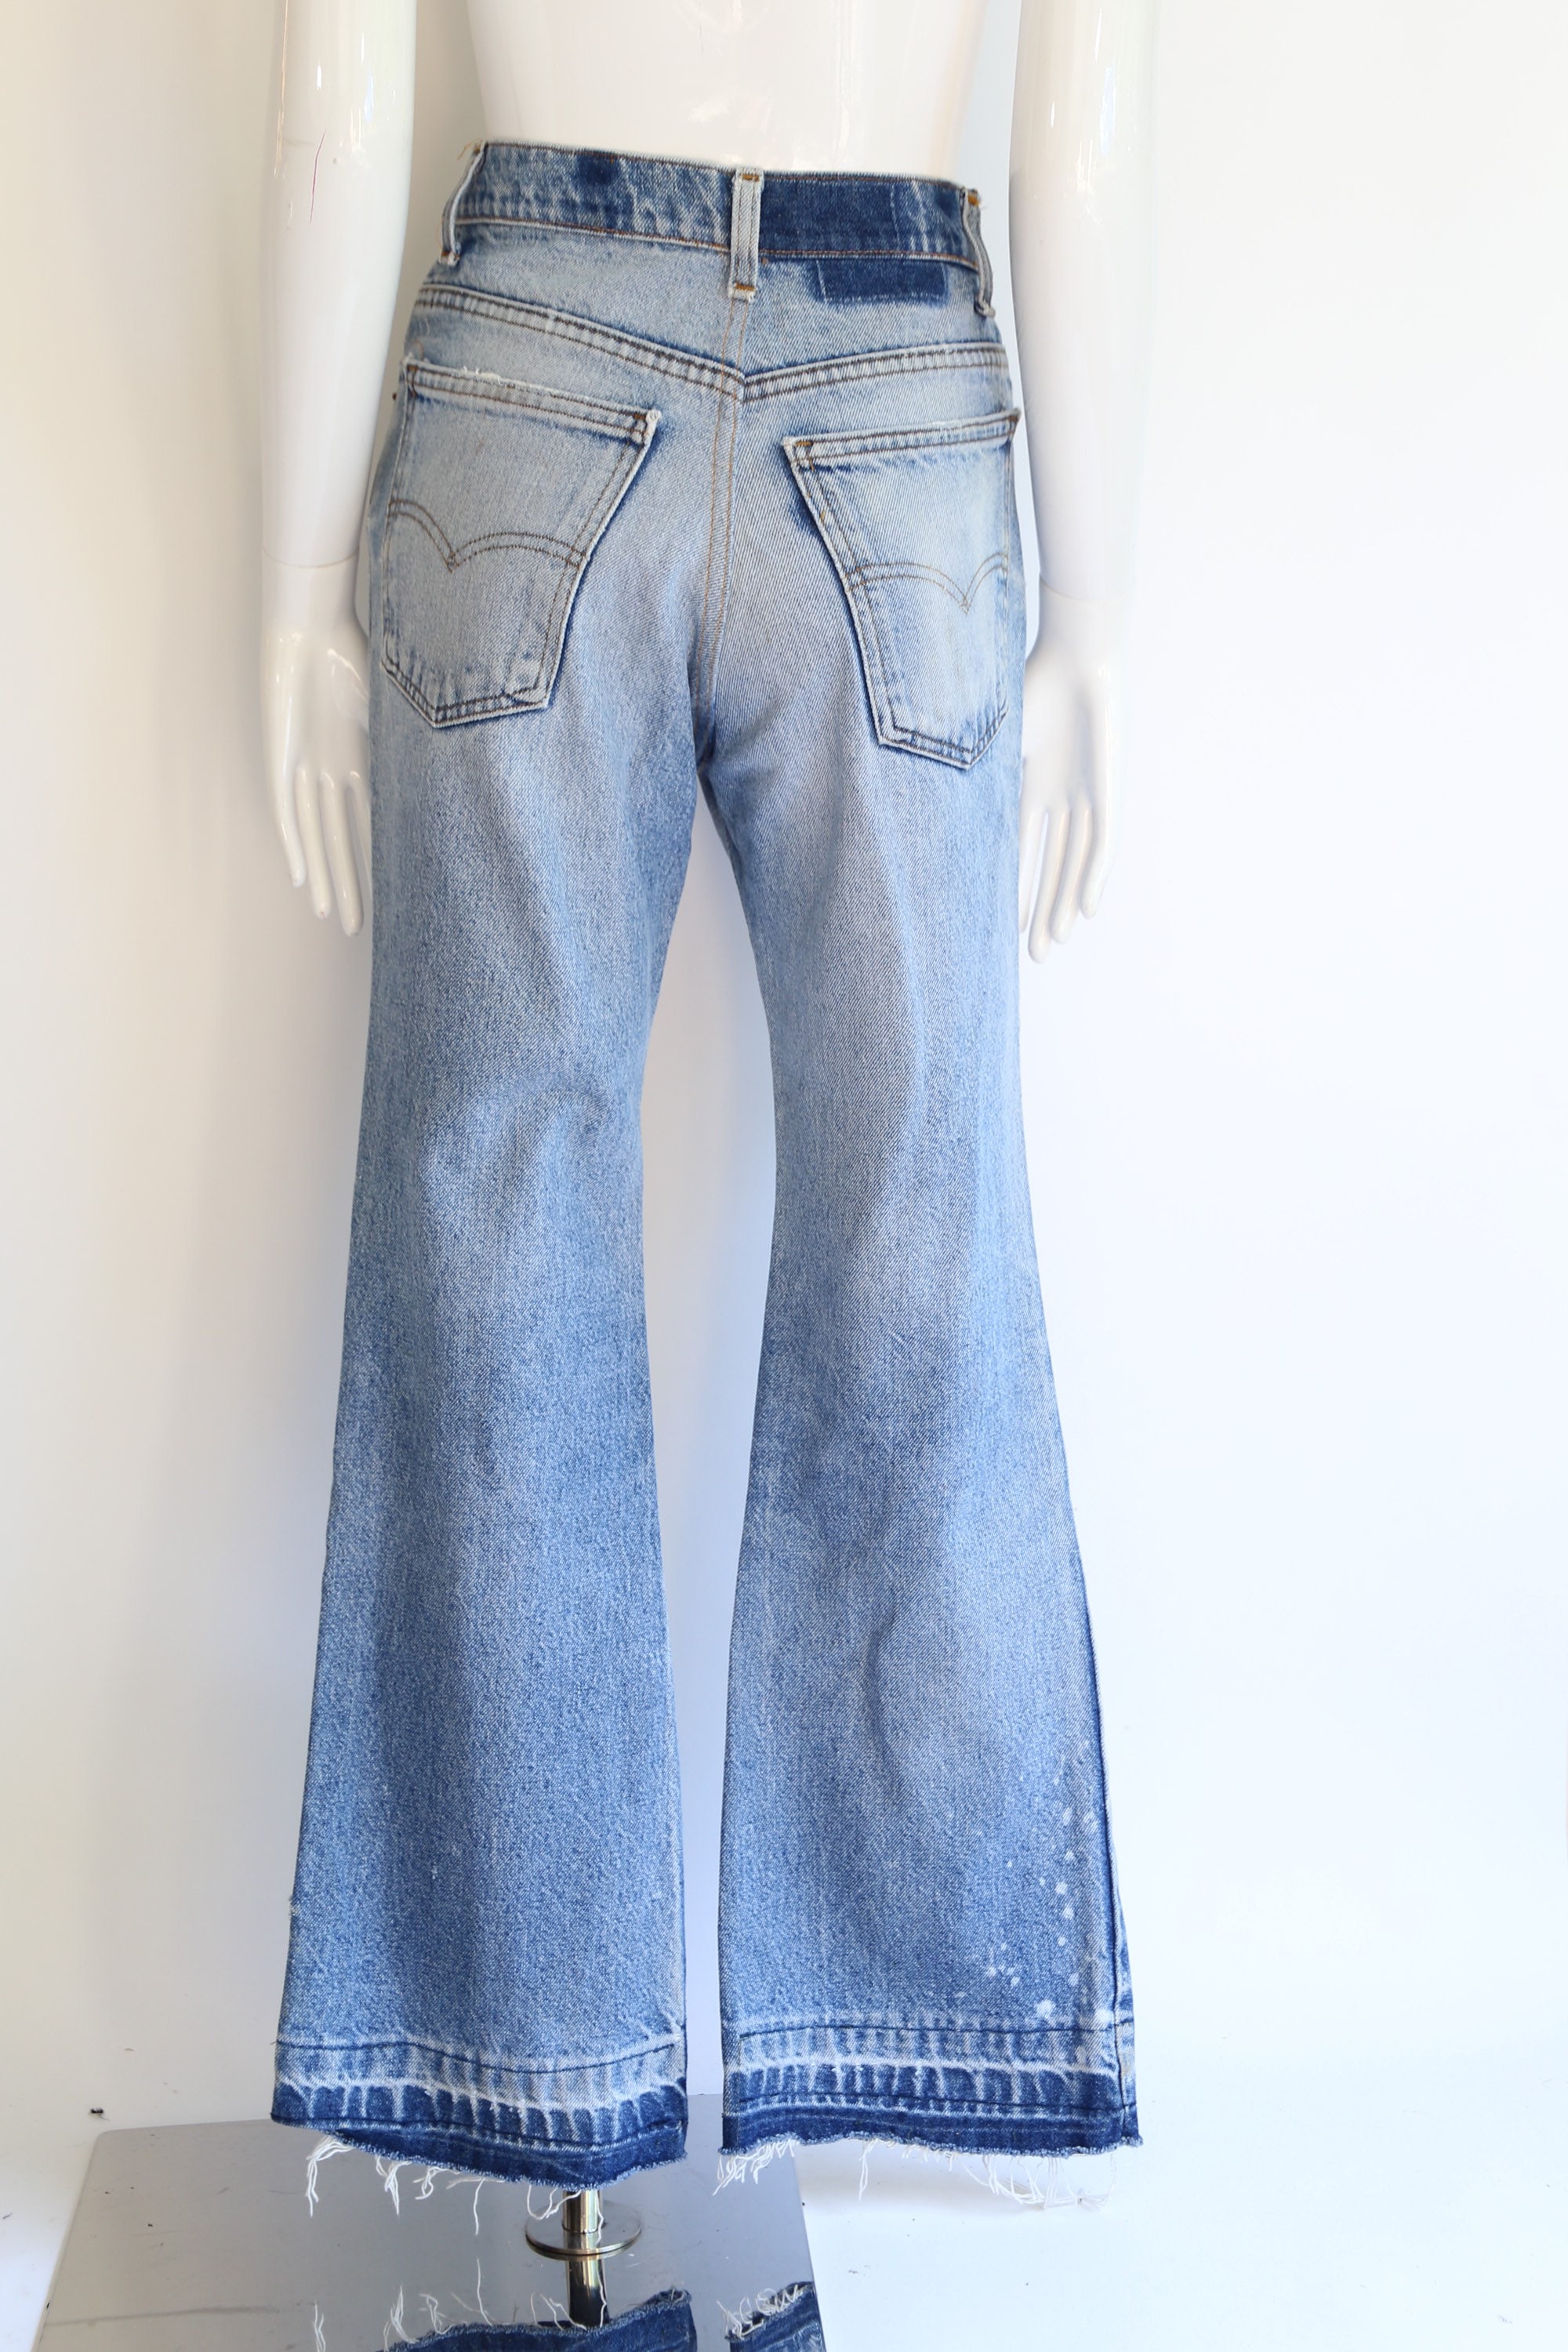 70s LEVIS 517 bells jeans 28 / vintage 1970s medium wash 646 sexy 